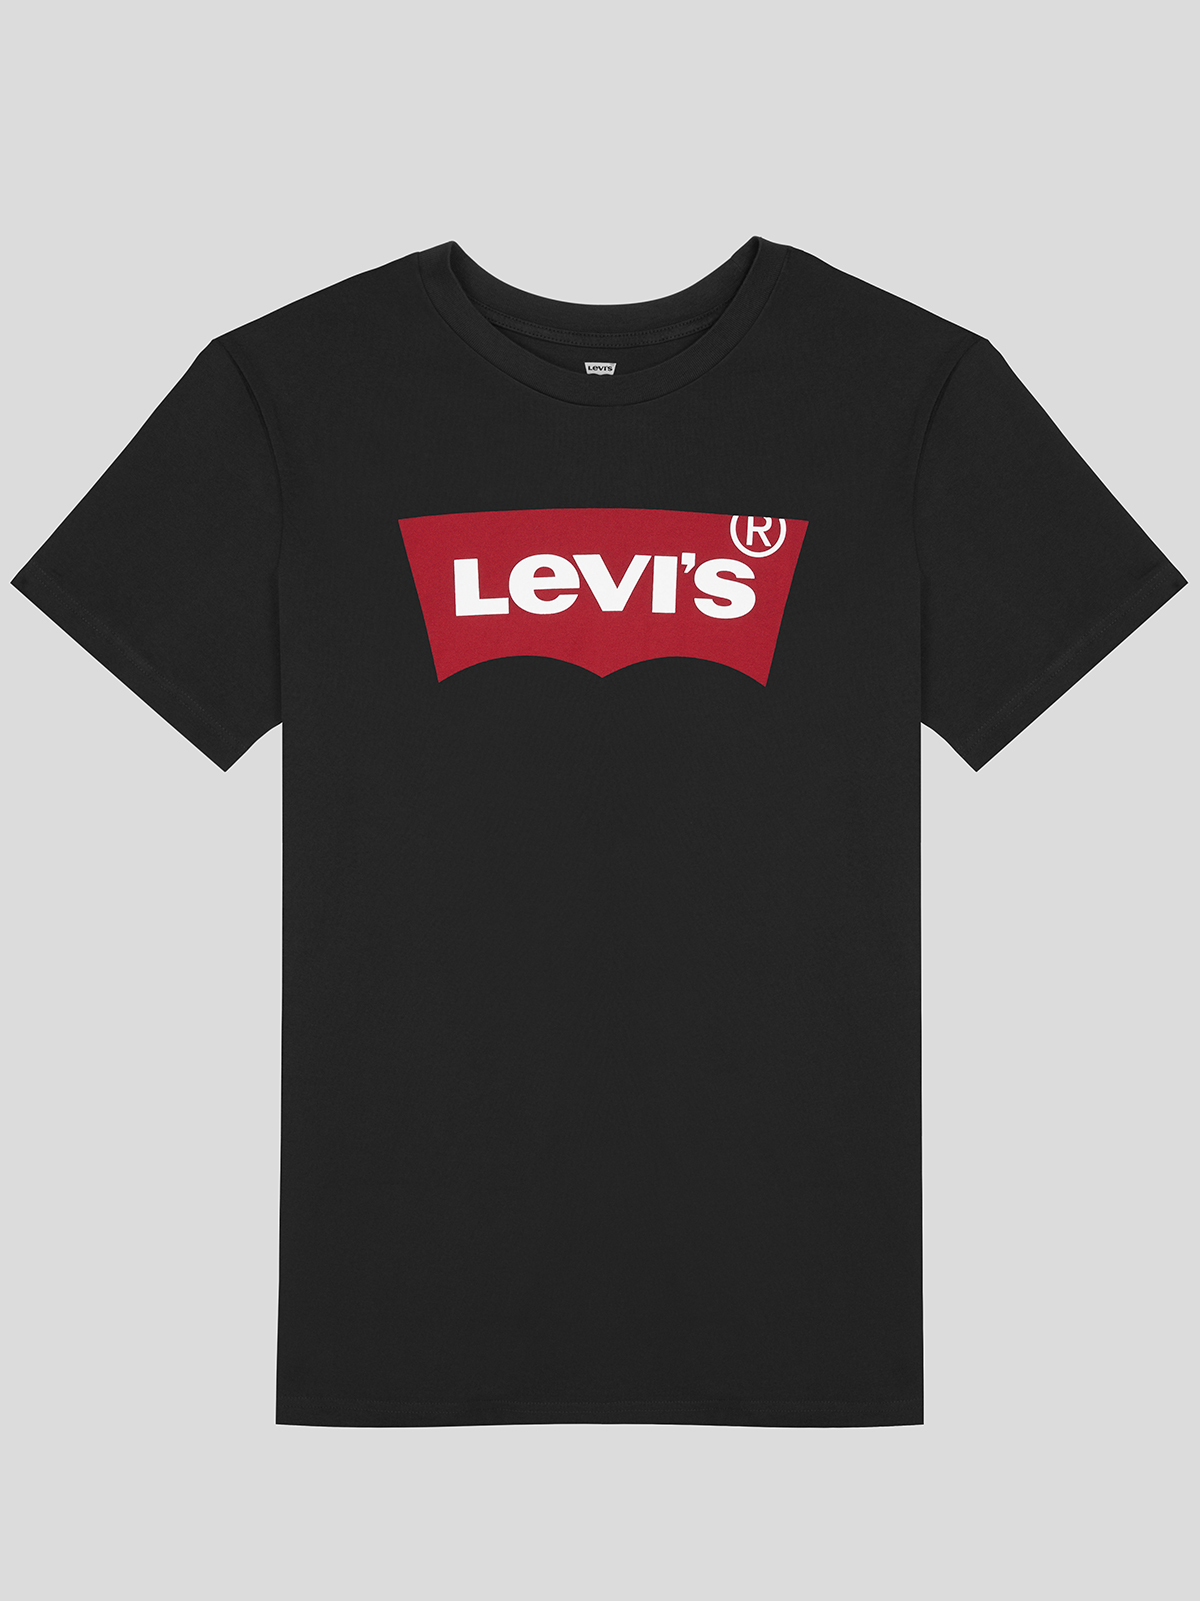 Tee-shirt Noir Logo Levi's Grande Taille homme grande taille